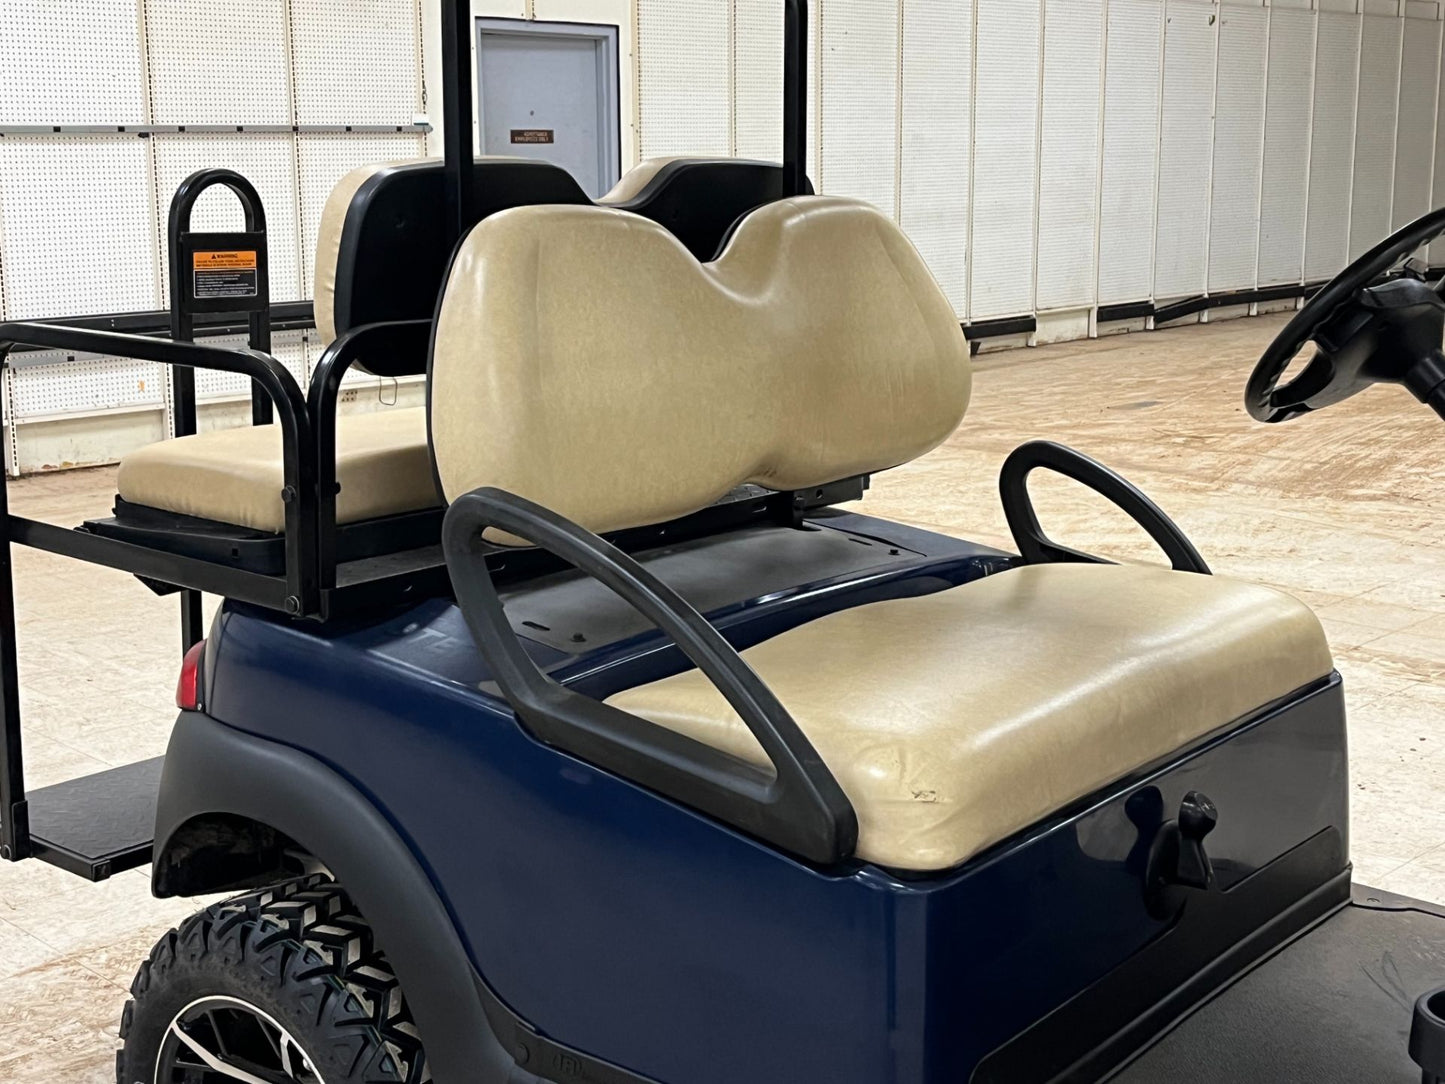 2017 Club Car Precedent I2 Kryptex Golf Carts